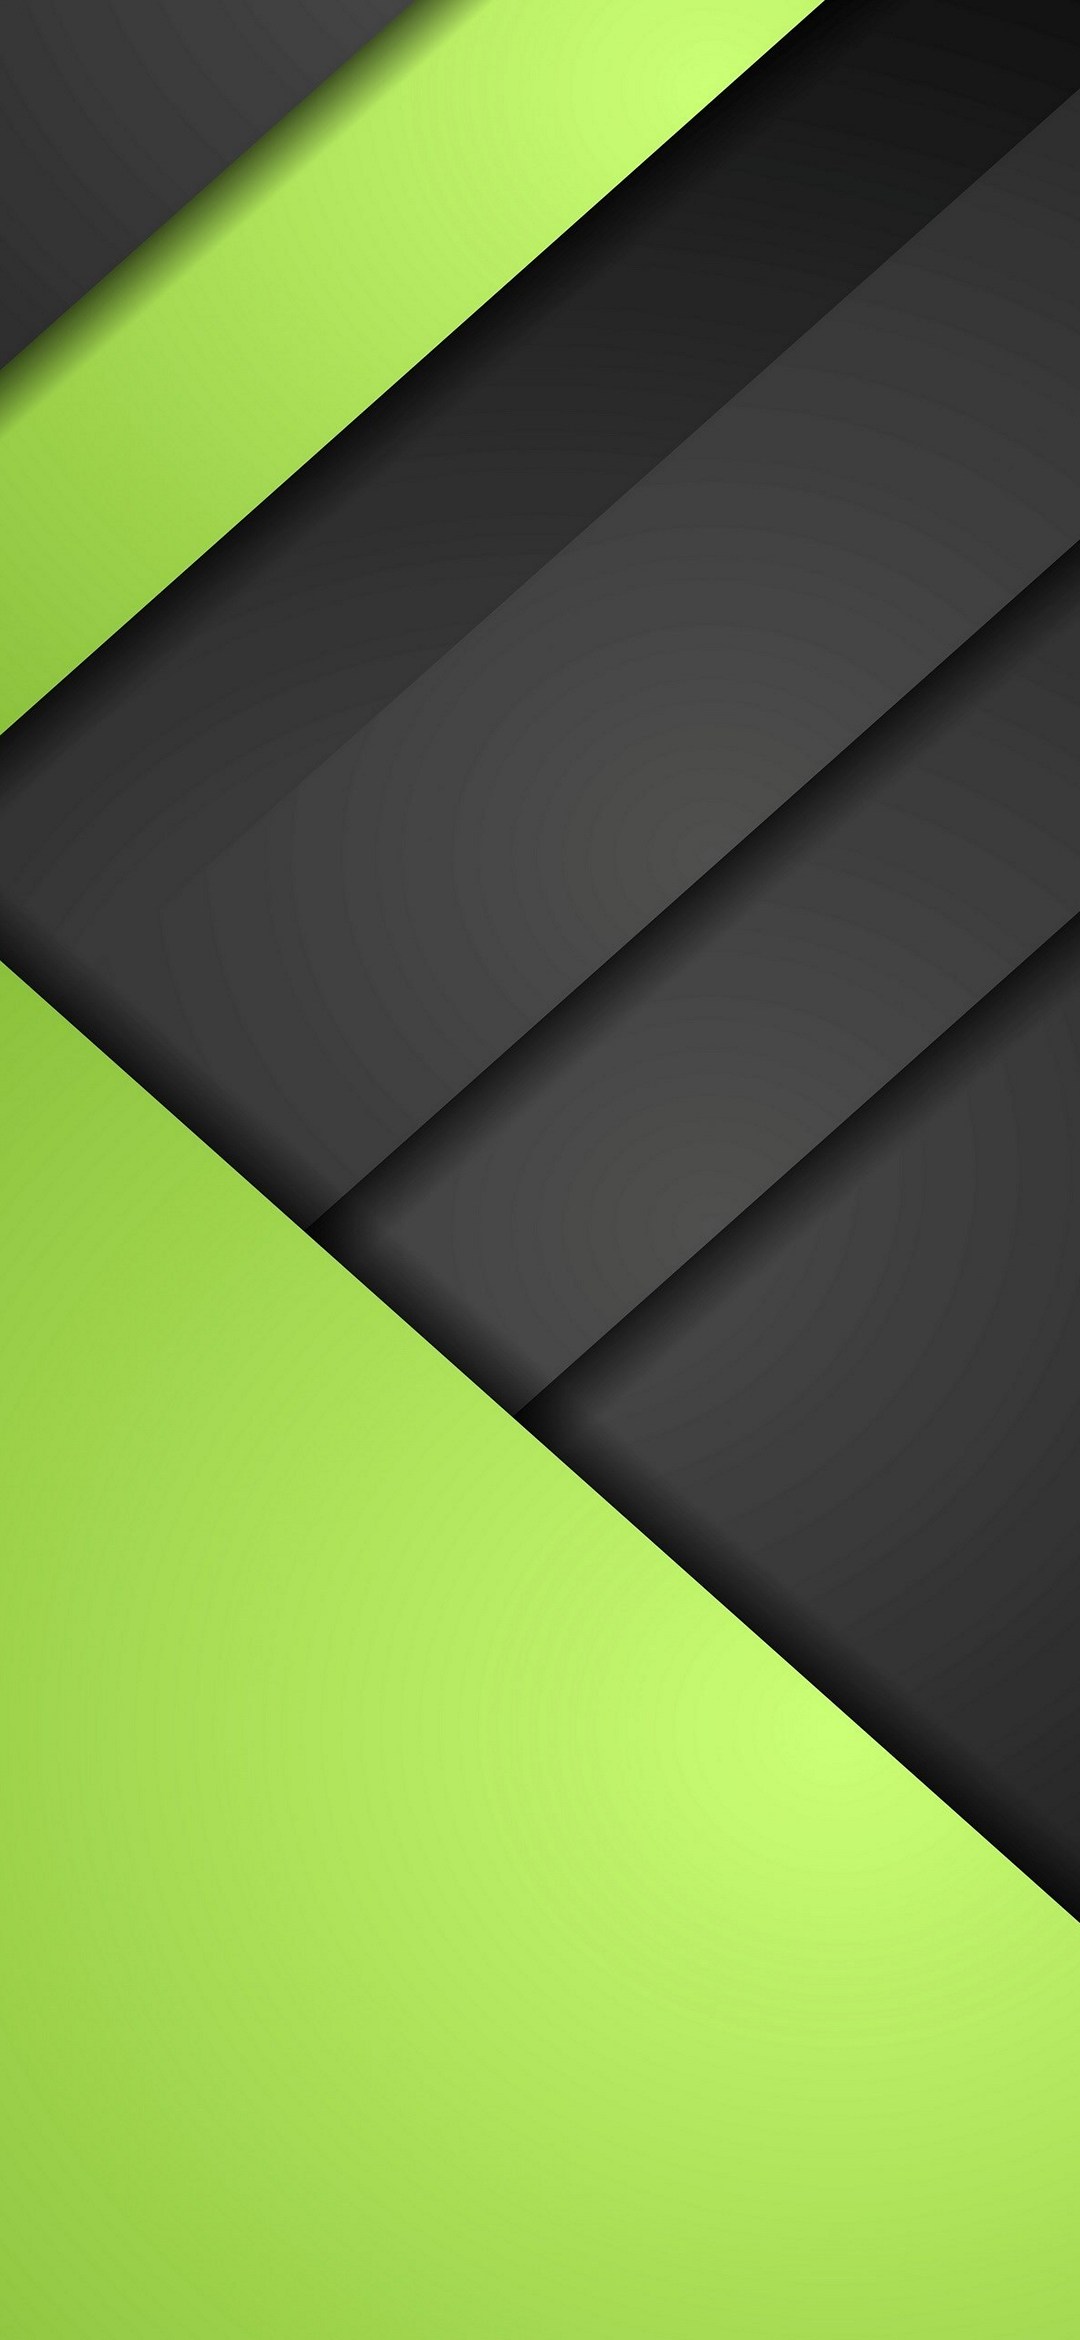 Black Step Apple Green Redmagic 5 Android スマホ壁紙 待ち受け スマラン